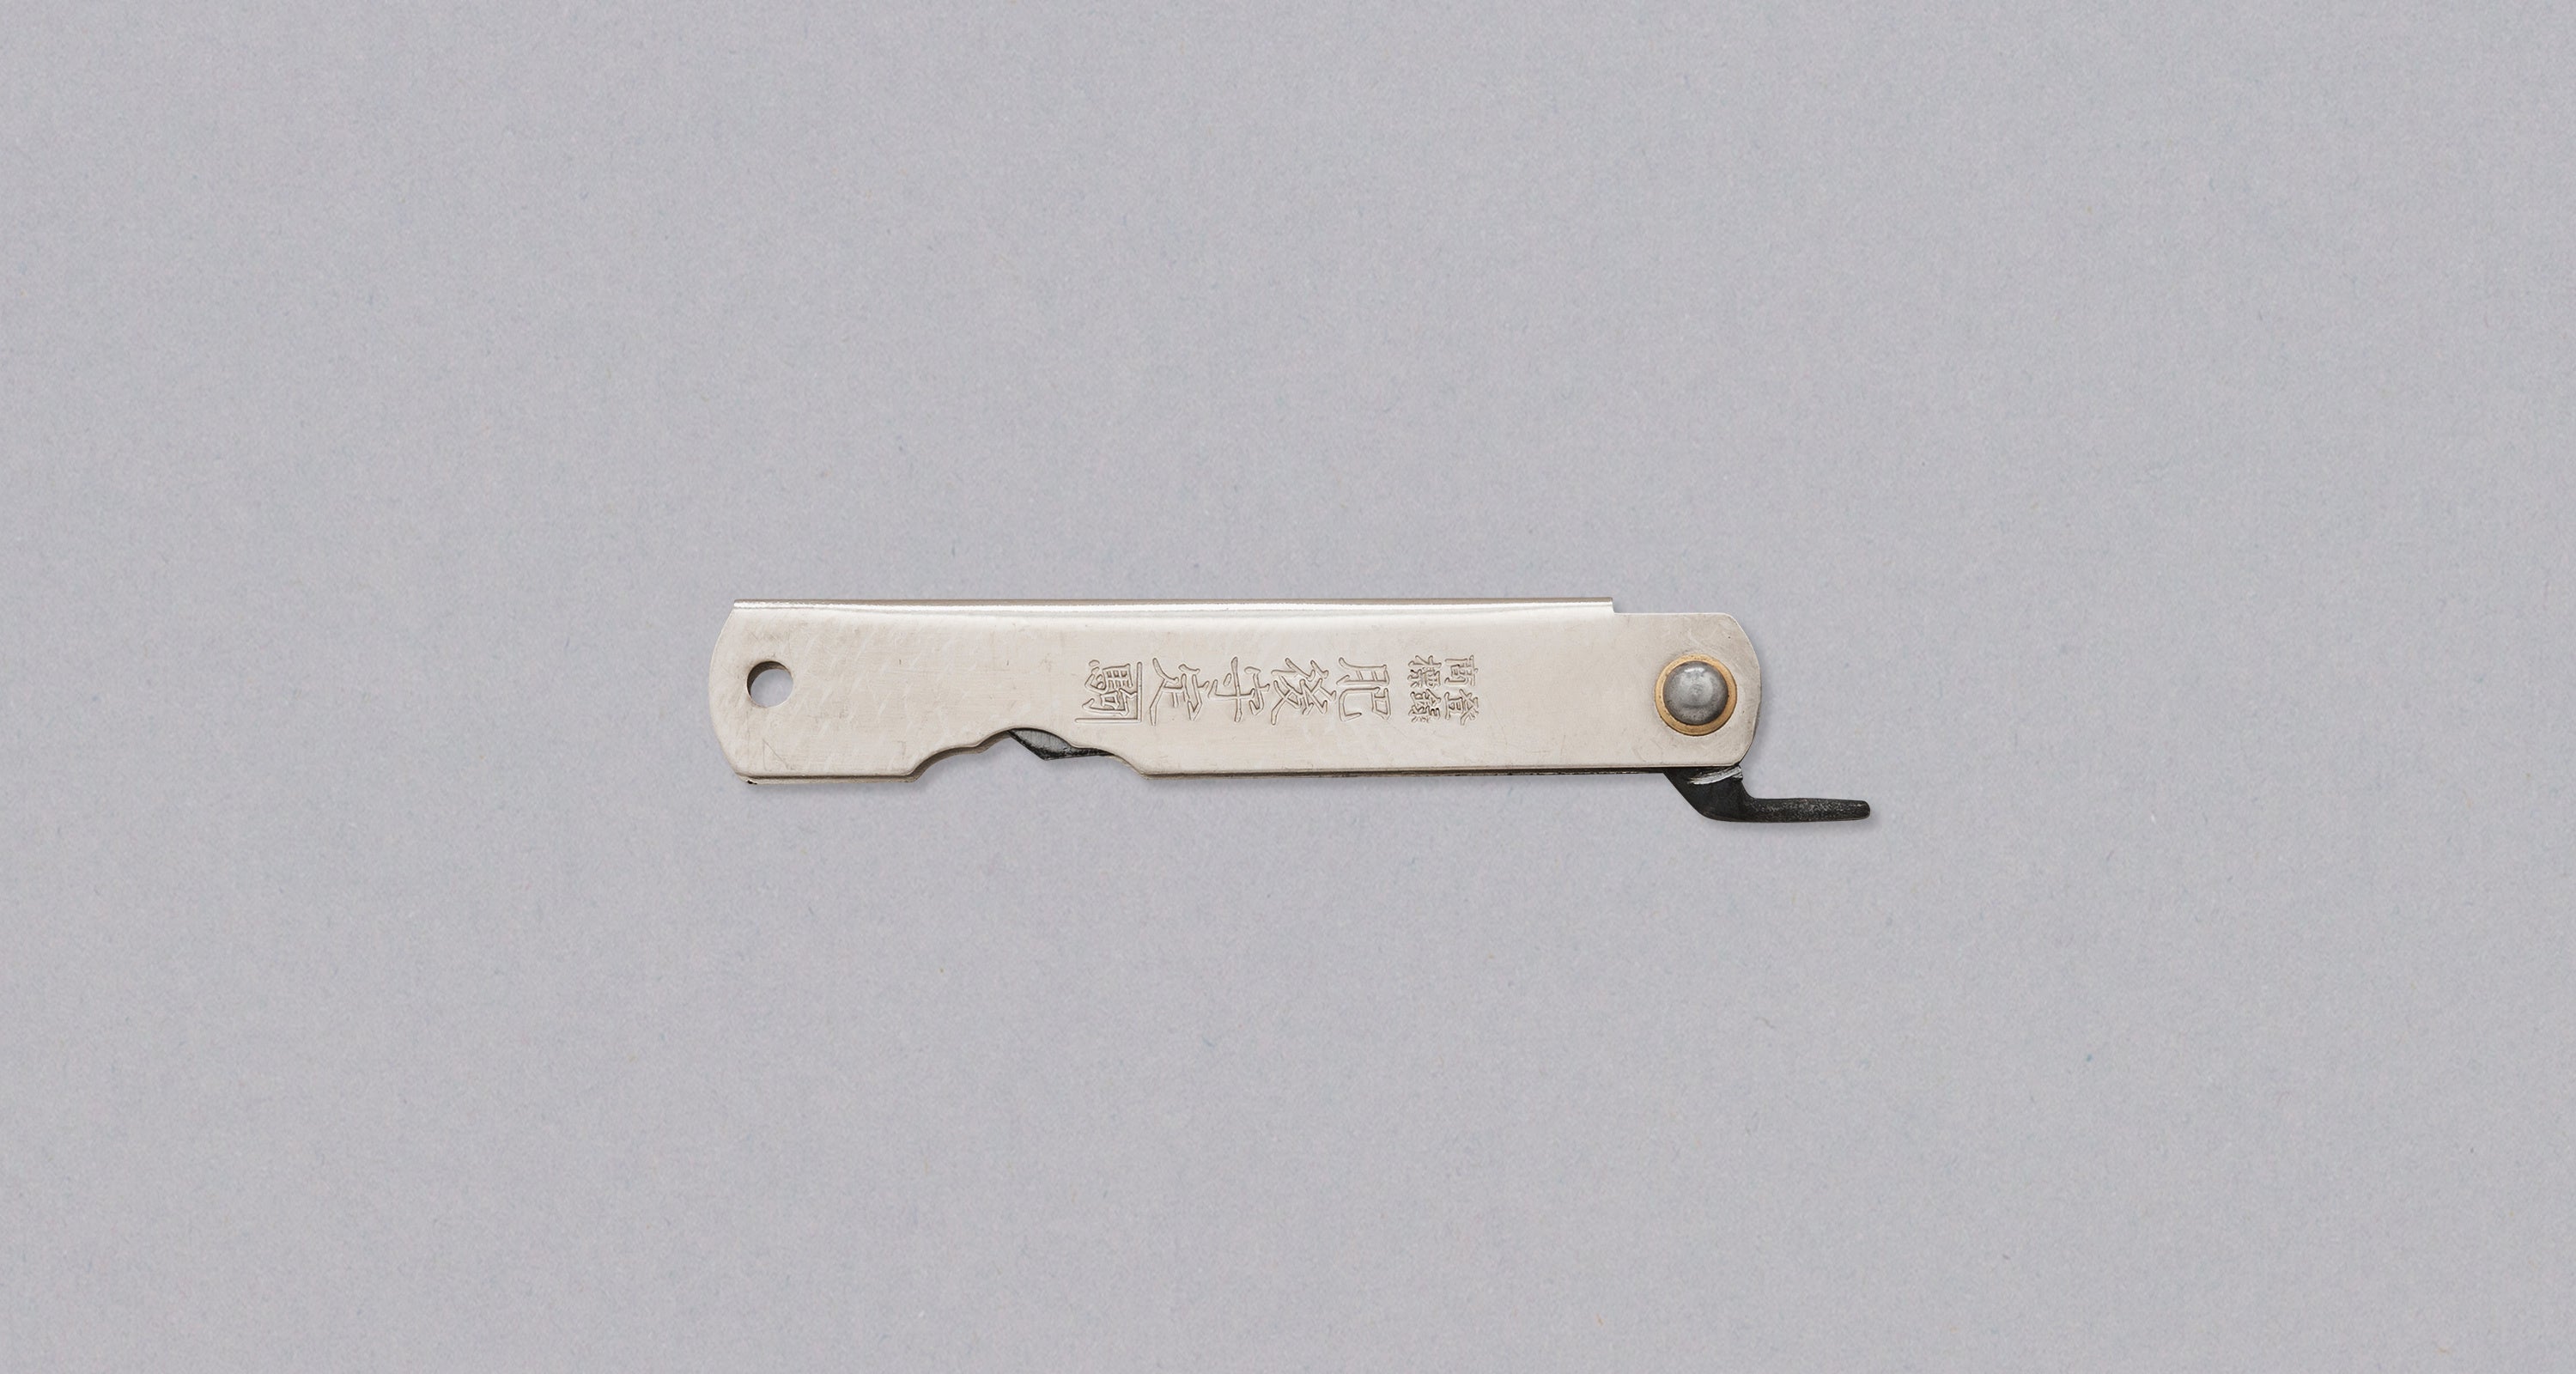 Higonokami No. 4 Pencil Sharpening Knife